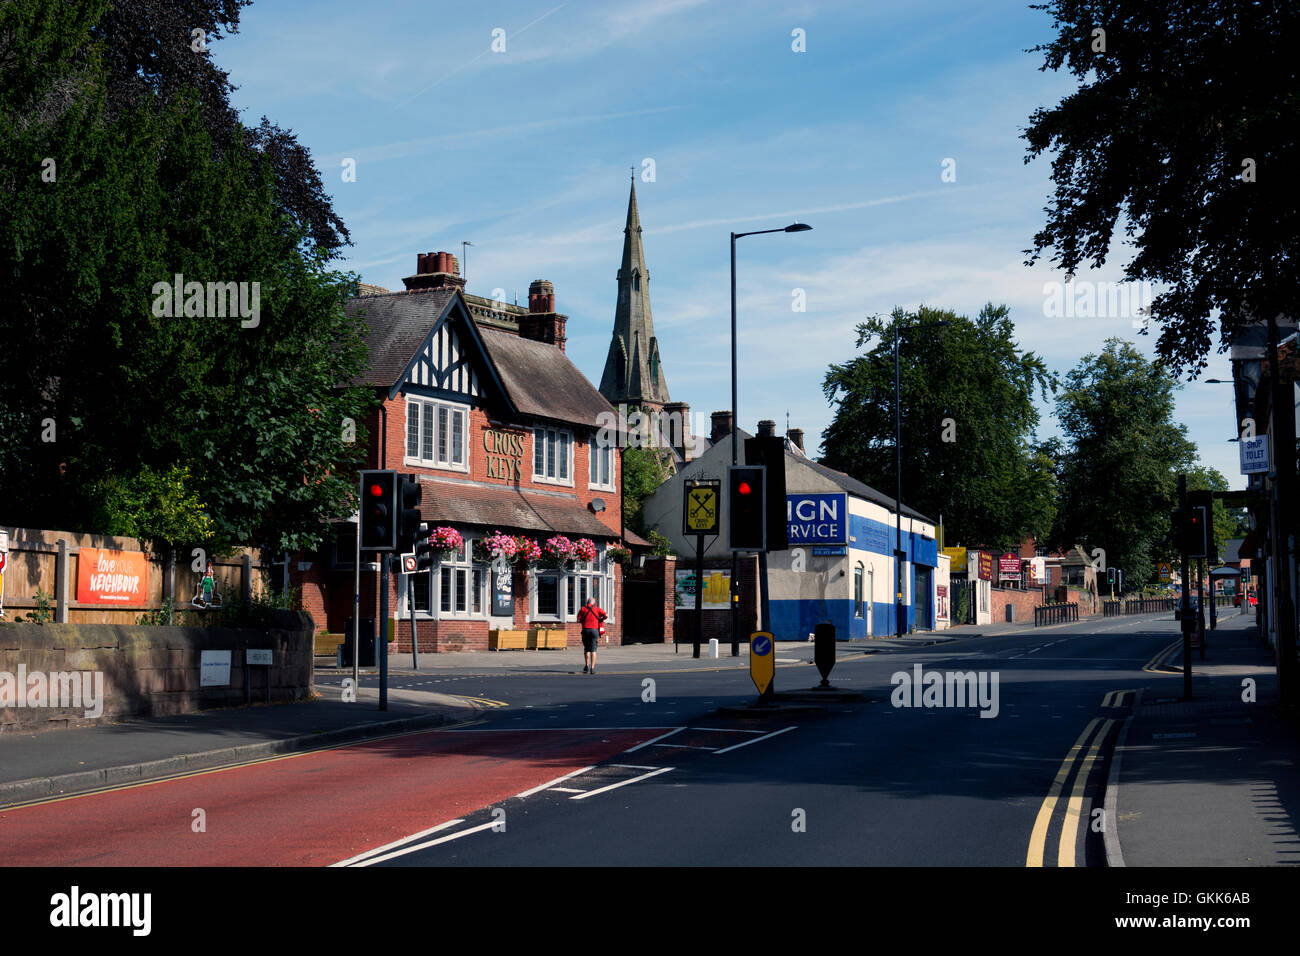 High Street and Cross Keys pub, Erdington, Birmingham, West Midlands, England, UK Stock Photo